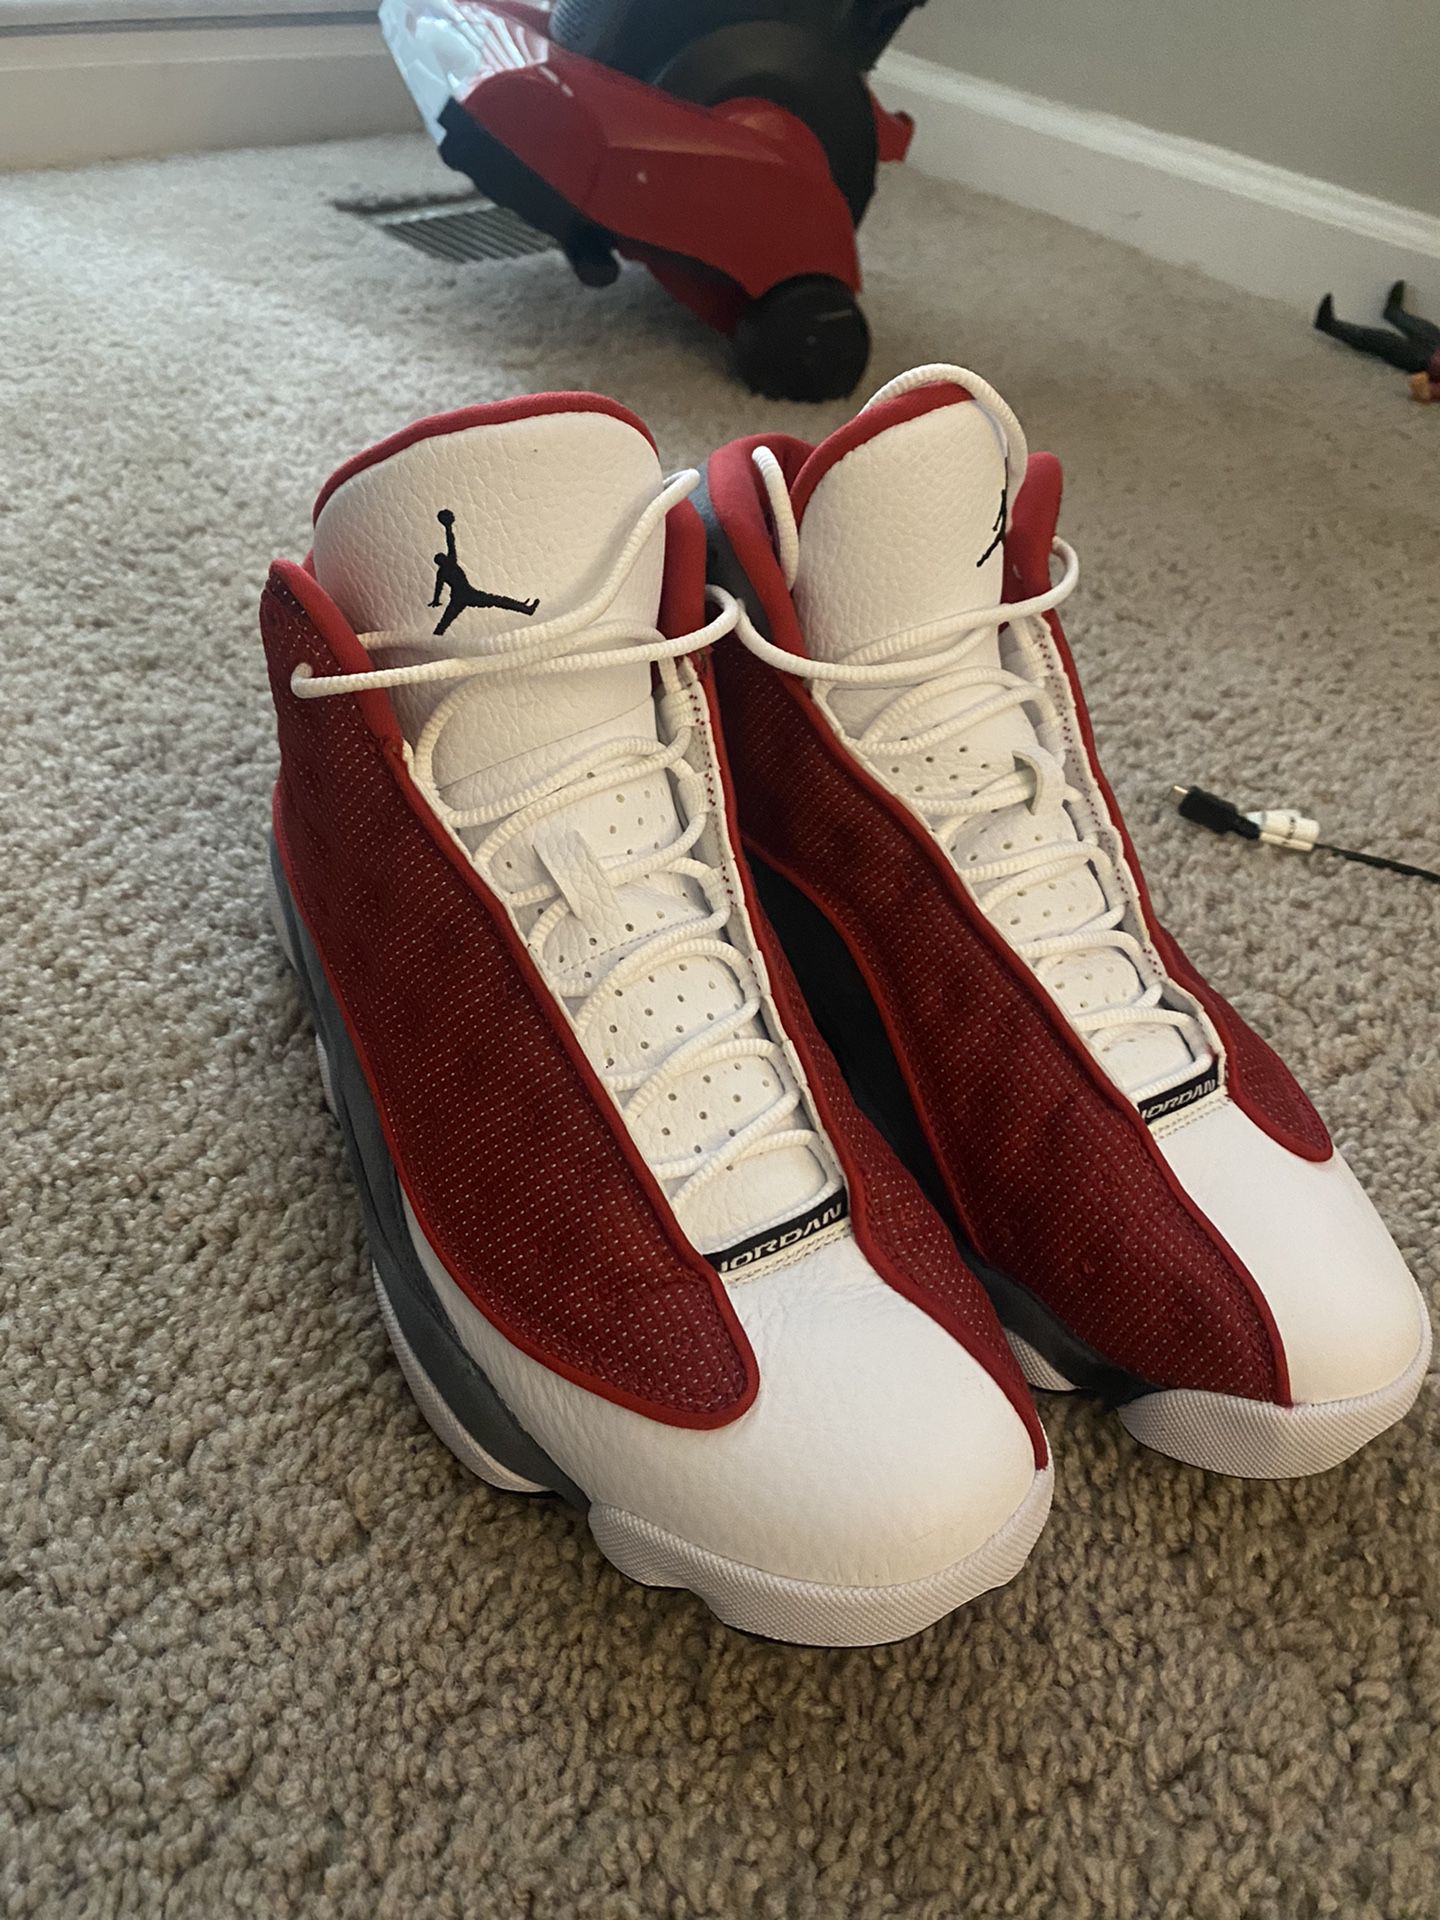 Jordan 13 Red Flints